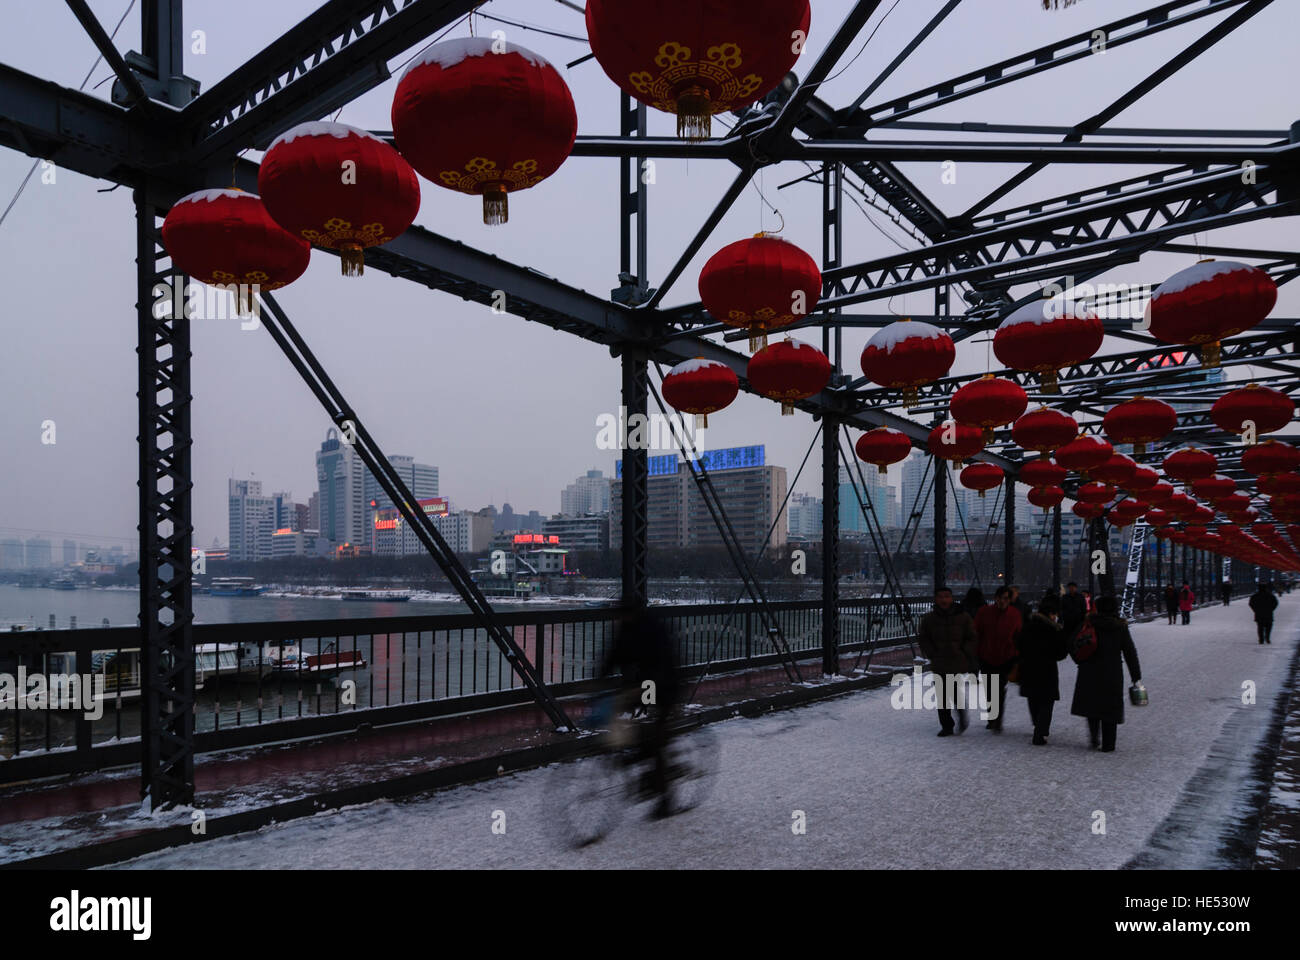 Lanzhou: Zhongshan Bridge over the Yellow River (Huang He) with lanterns to the New Year festival, Gansu, China Stock Photo